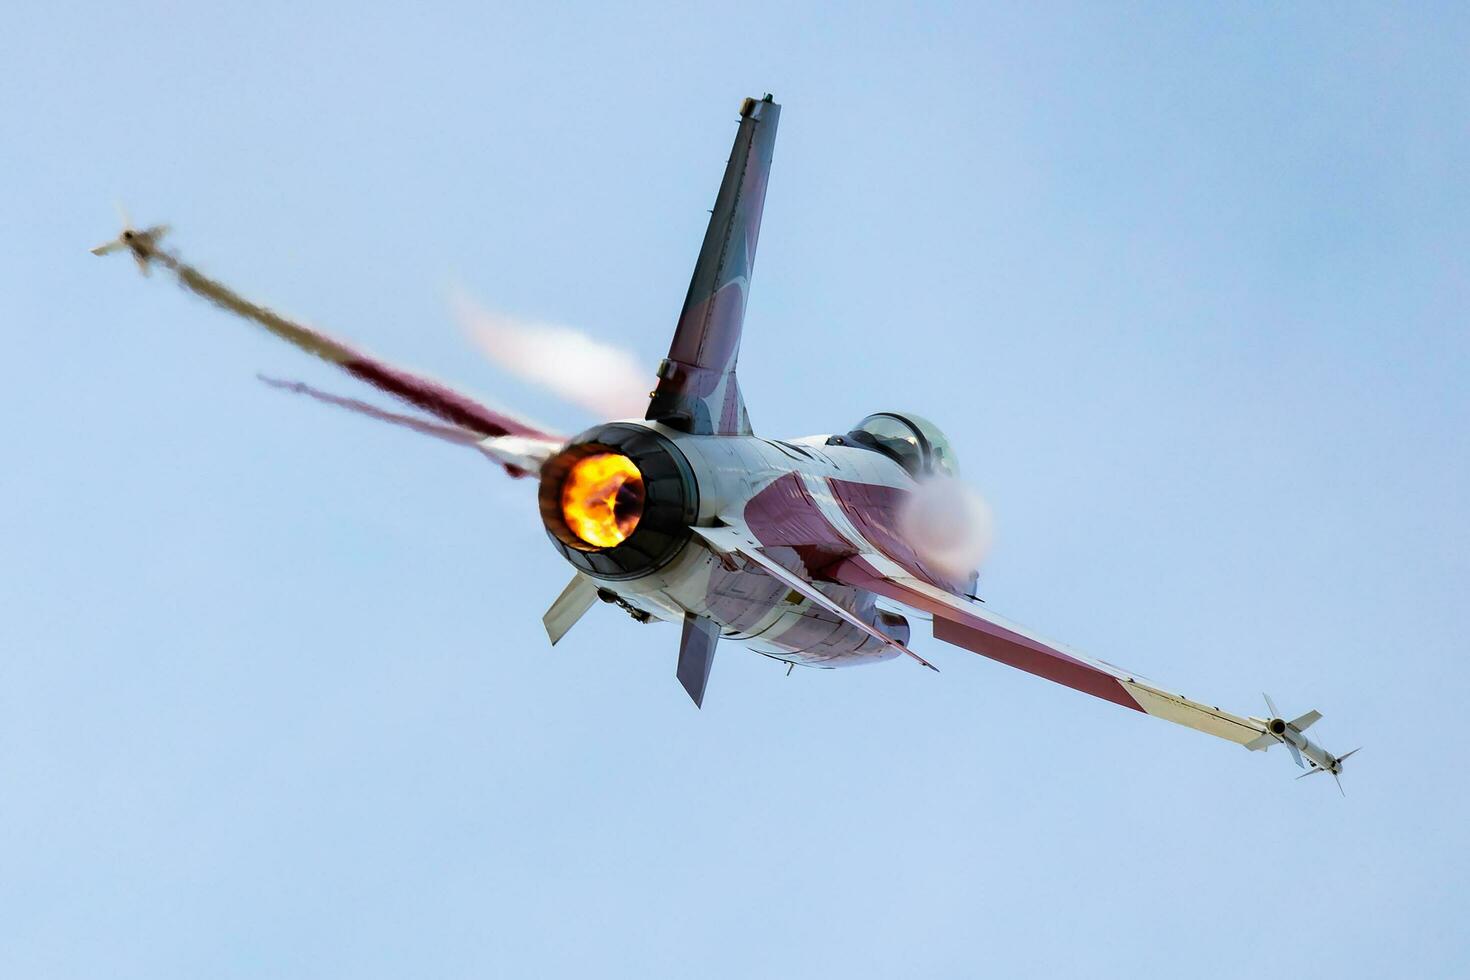 Koninklijk Deens lucht dwingen lockheed f-16 vechten valk vechter Jet vlak vliegen. luchtvaart en leger vliegtuigen. foto